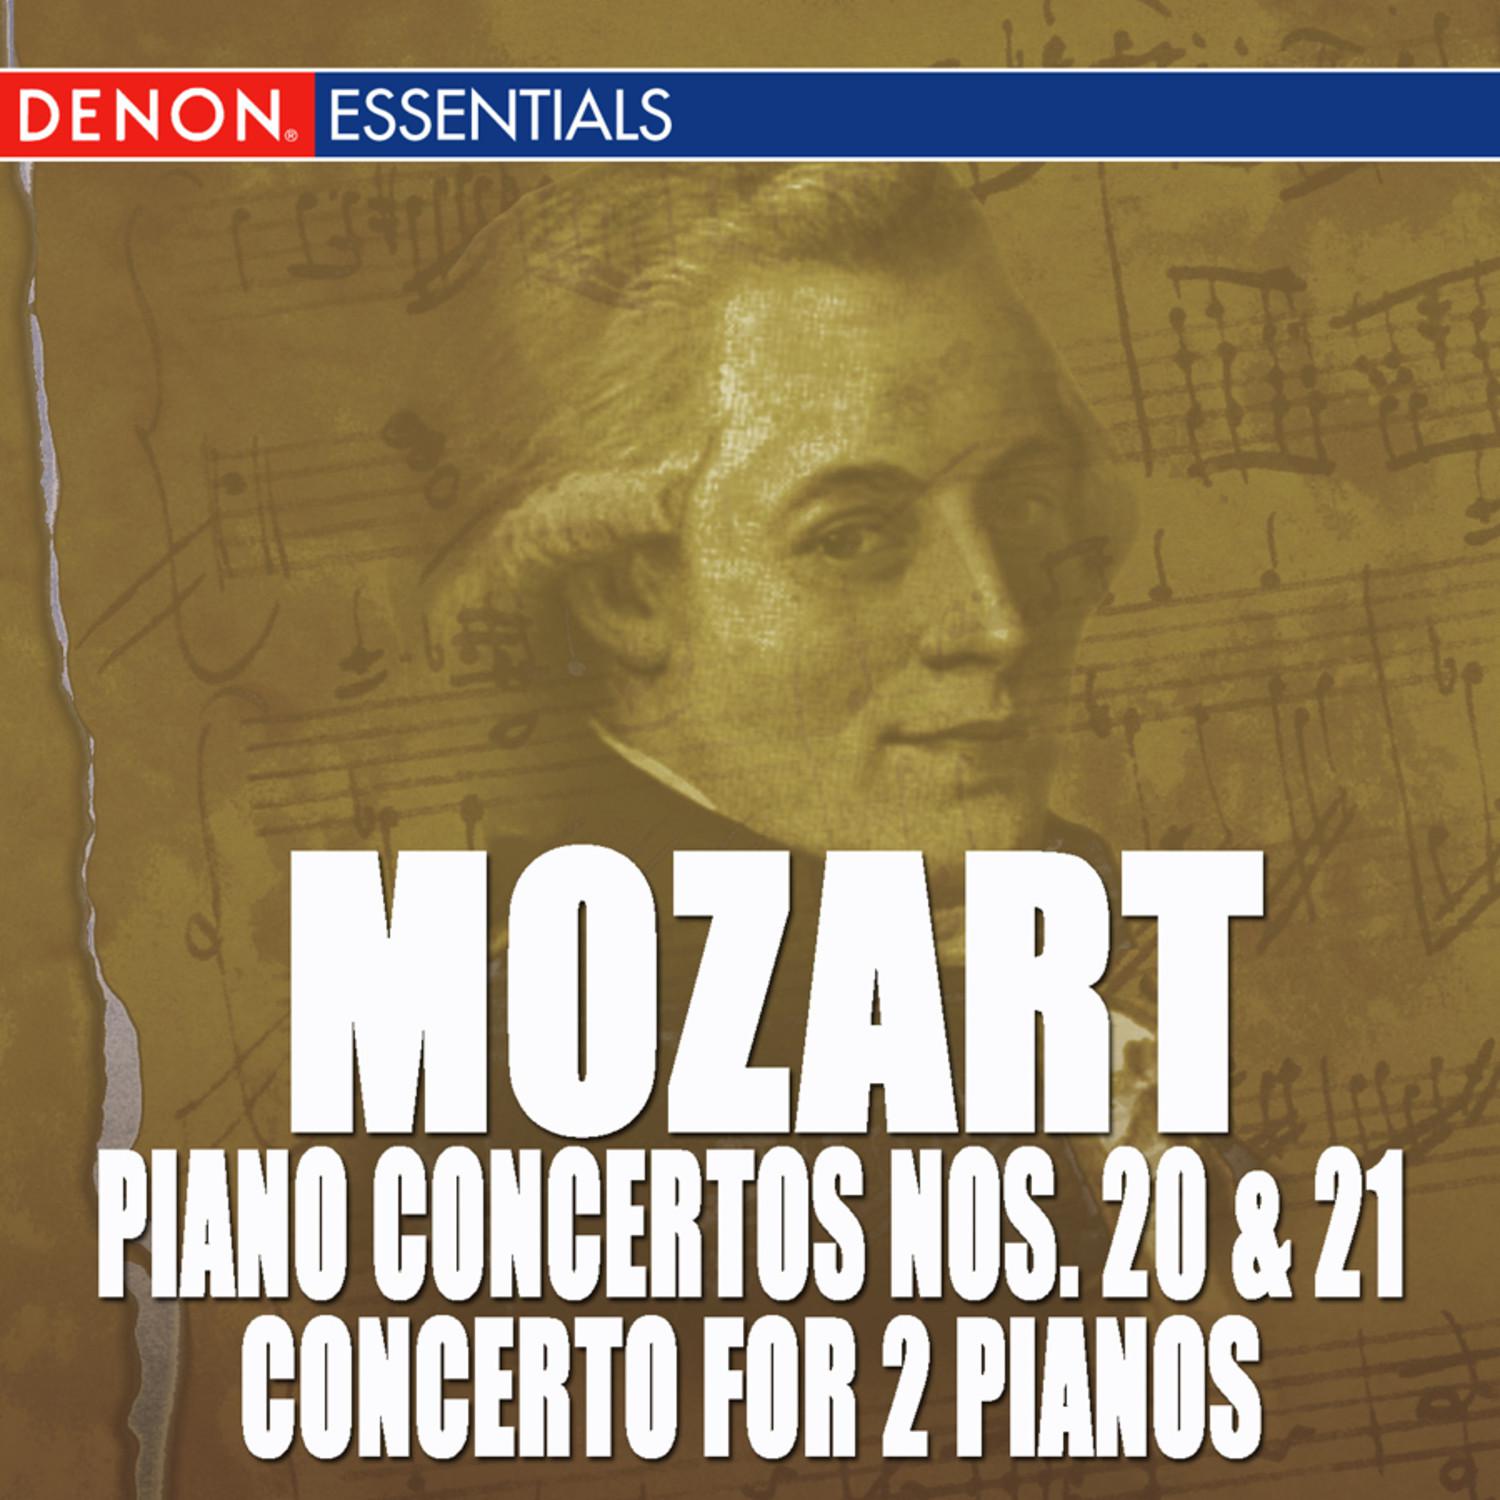 Mozart: Piano Concertos Nos. 20, 21 & Concerto for 2 Pianos